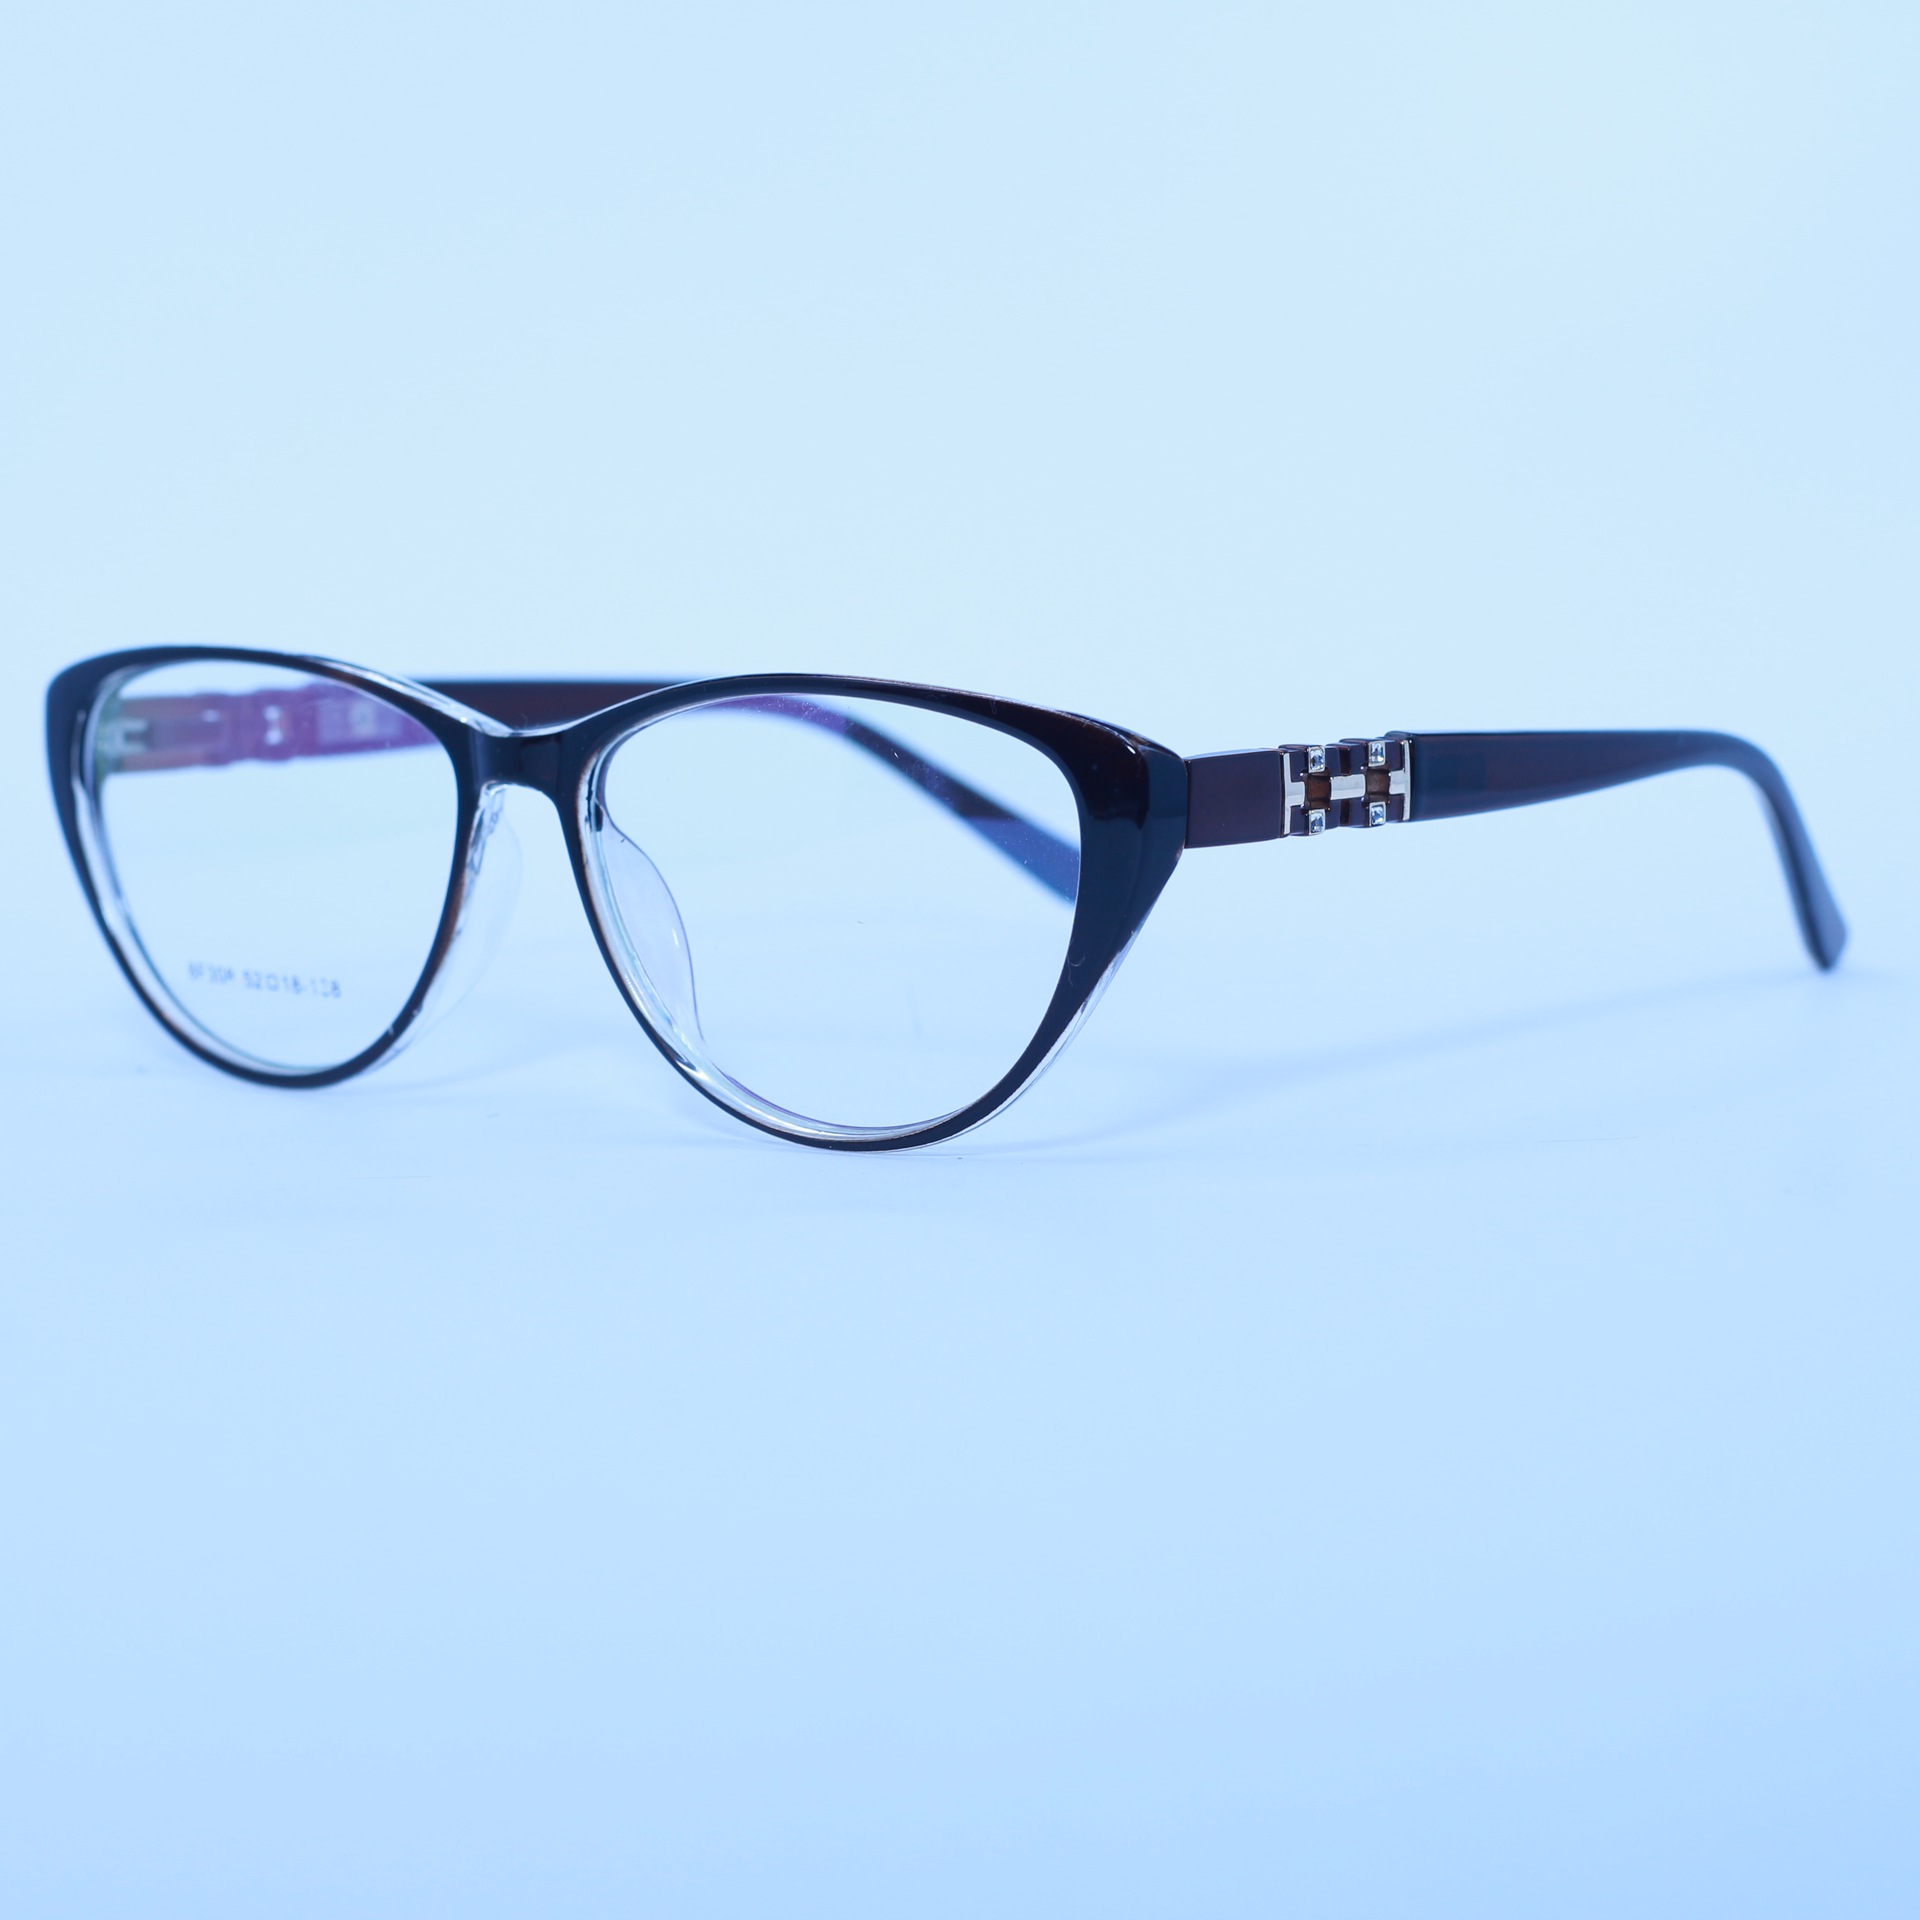 Sungee Optical Frame 8044A - Buy Online Eye Glasses Frames in Pakistan ...